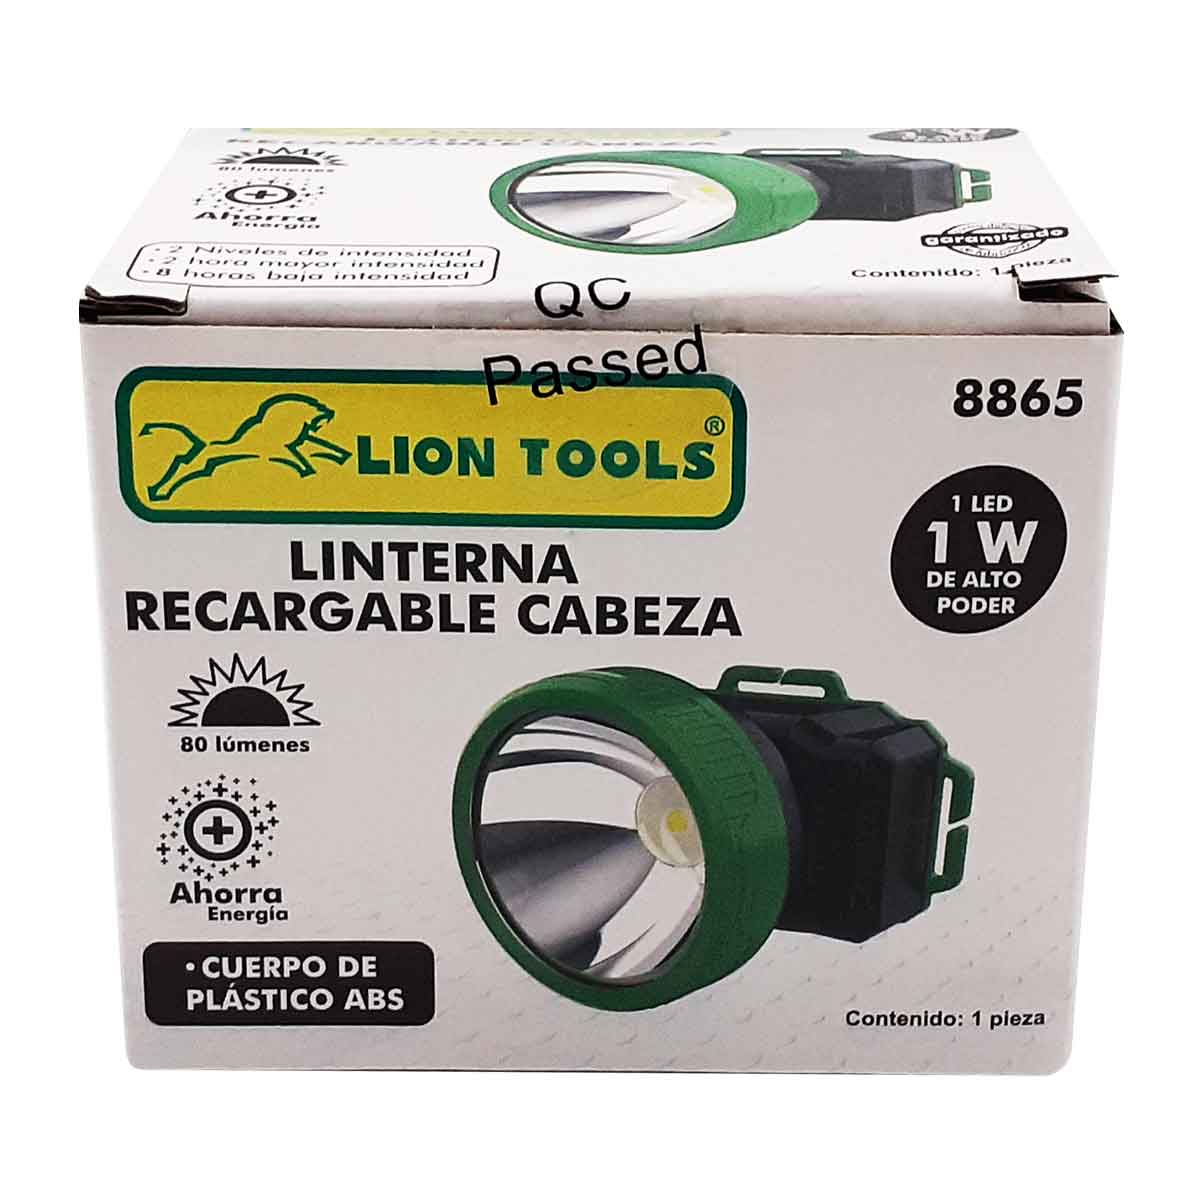 Linterna Led Recargable De Cabeza Minero 1w 80lm 8865 Lion Tools LION TOOLS Ferreabasto